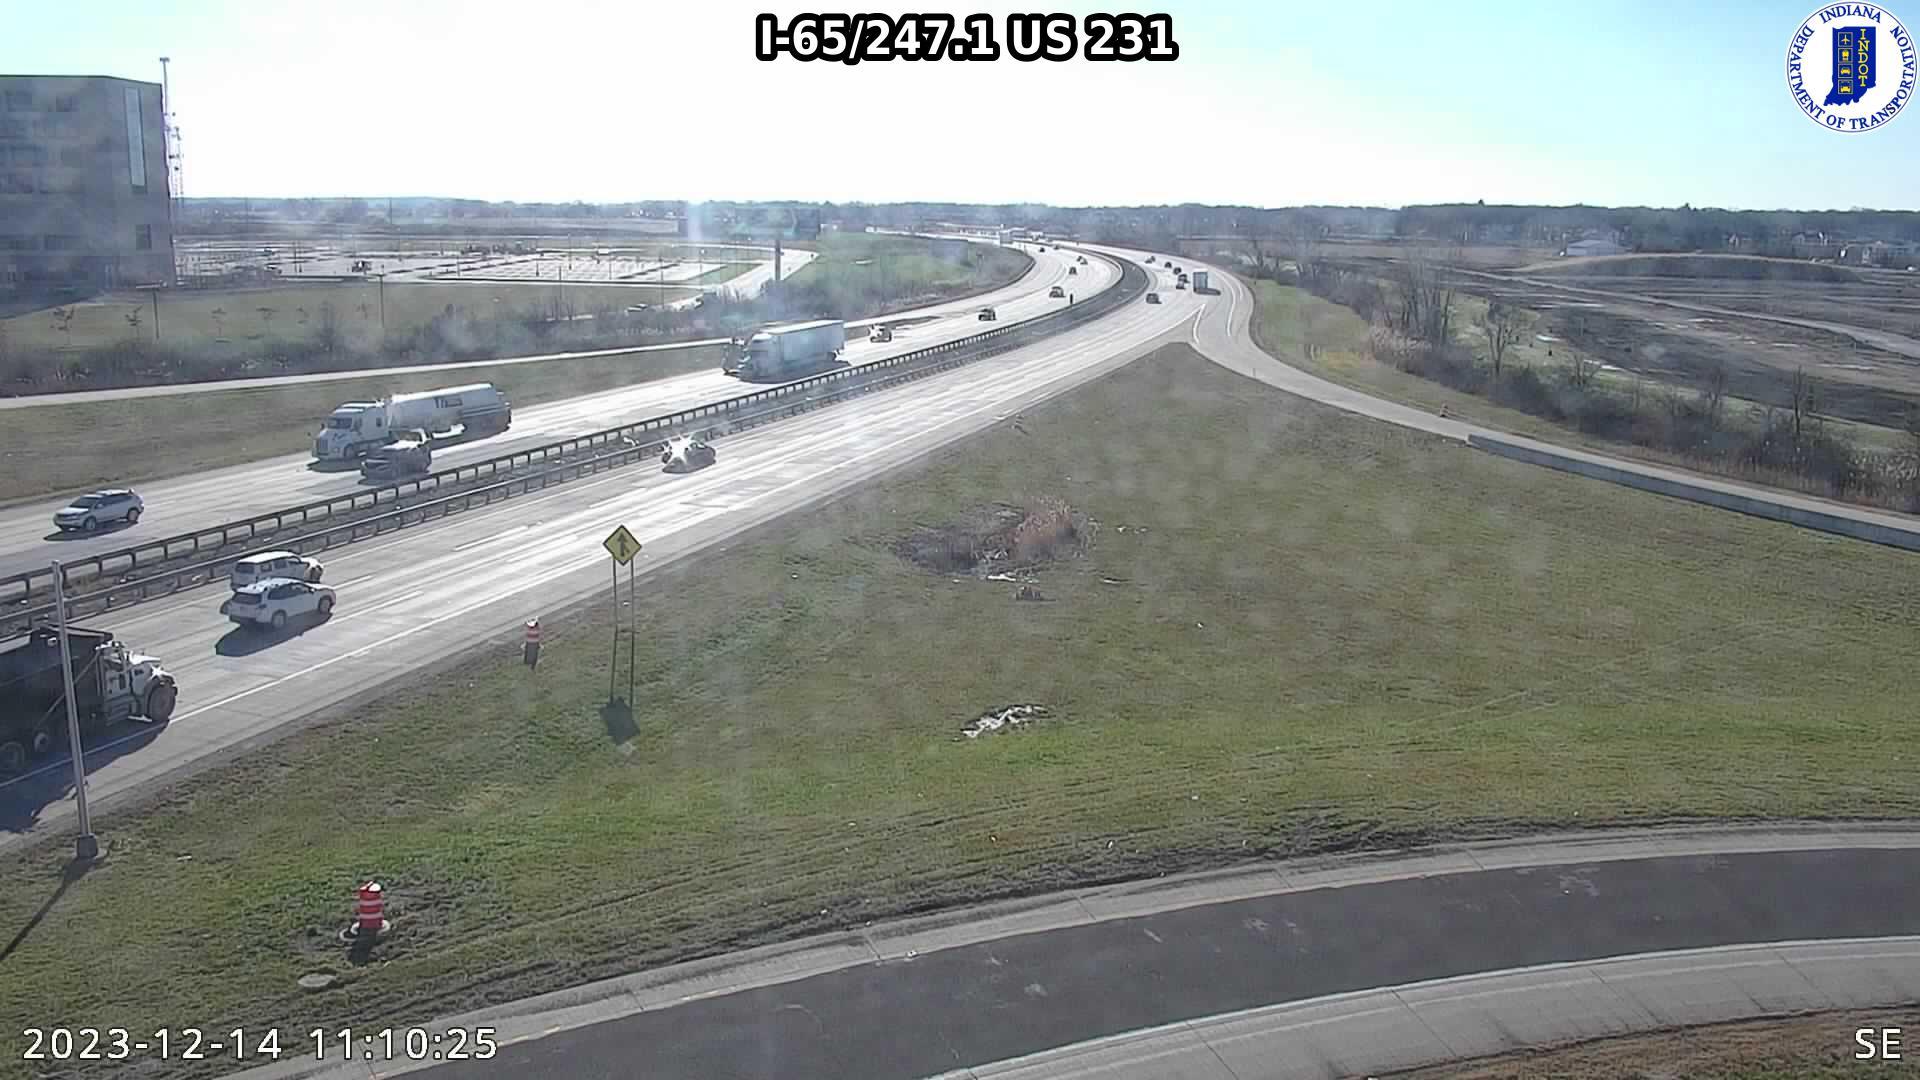 Traffic Cam Crown Point: I-65: I-65/247.1 US 231